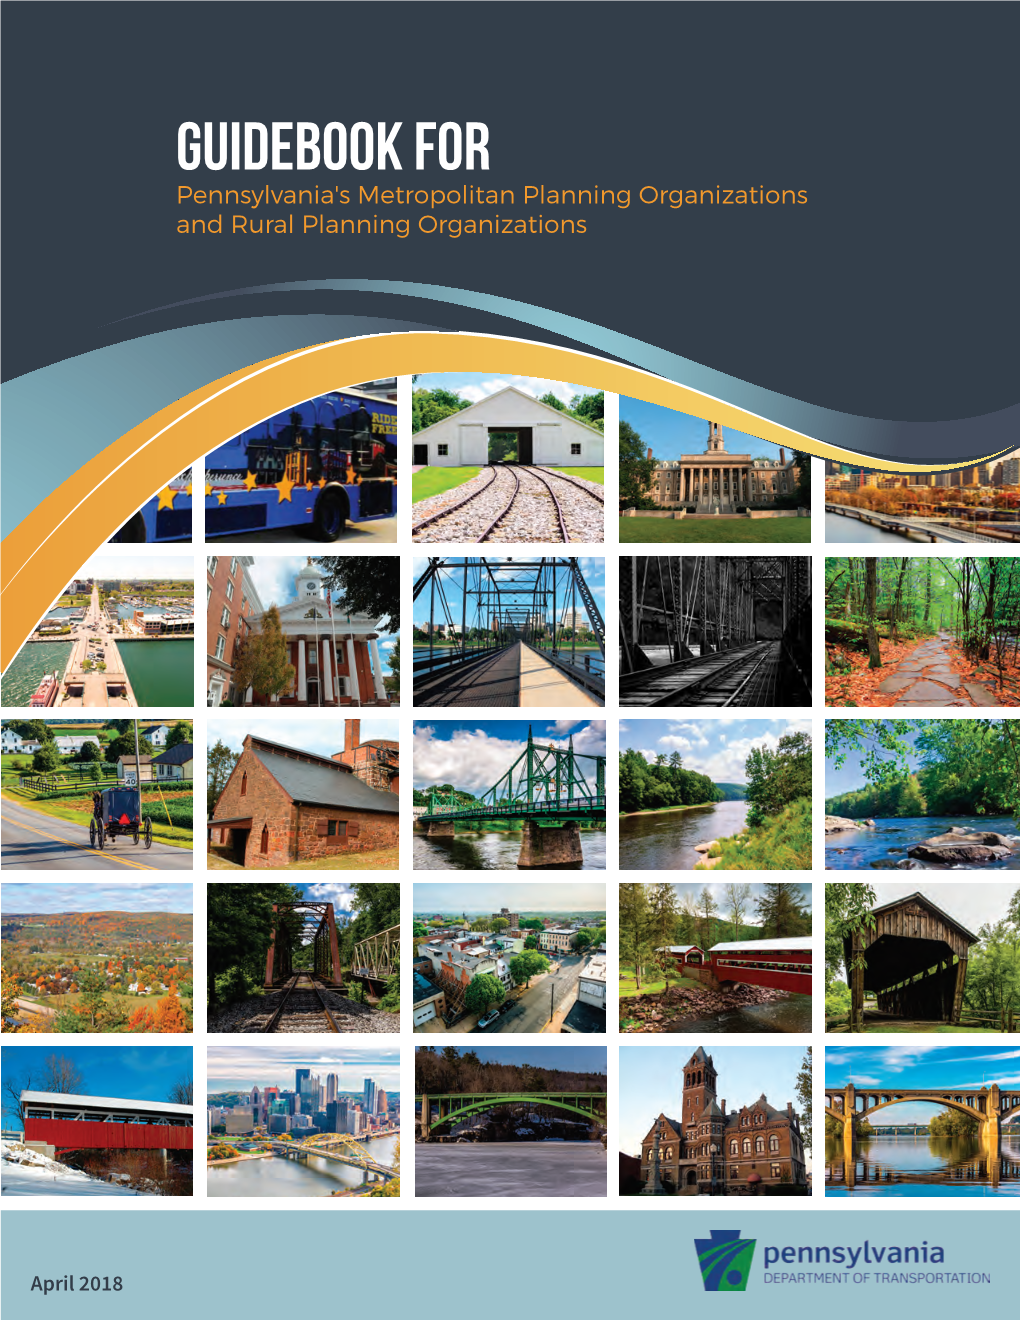 April 2018 GUIDEBOOK for Pennsylvania's Metropolitan Planning Organizations and Rural Planning Organizations